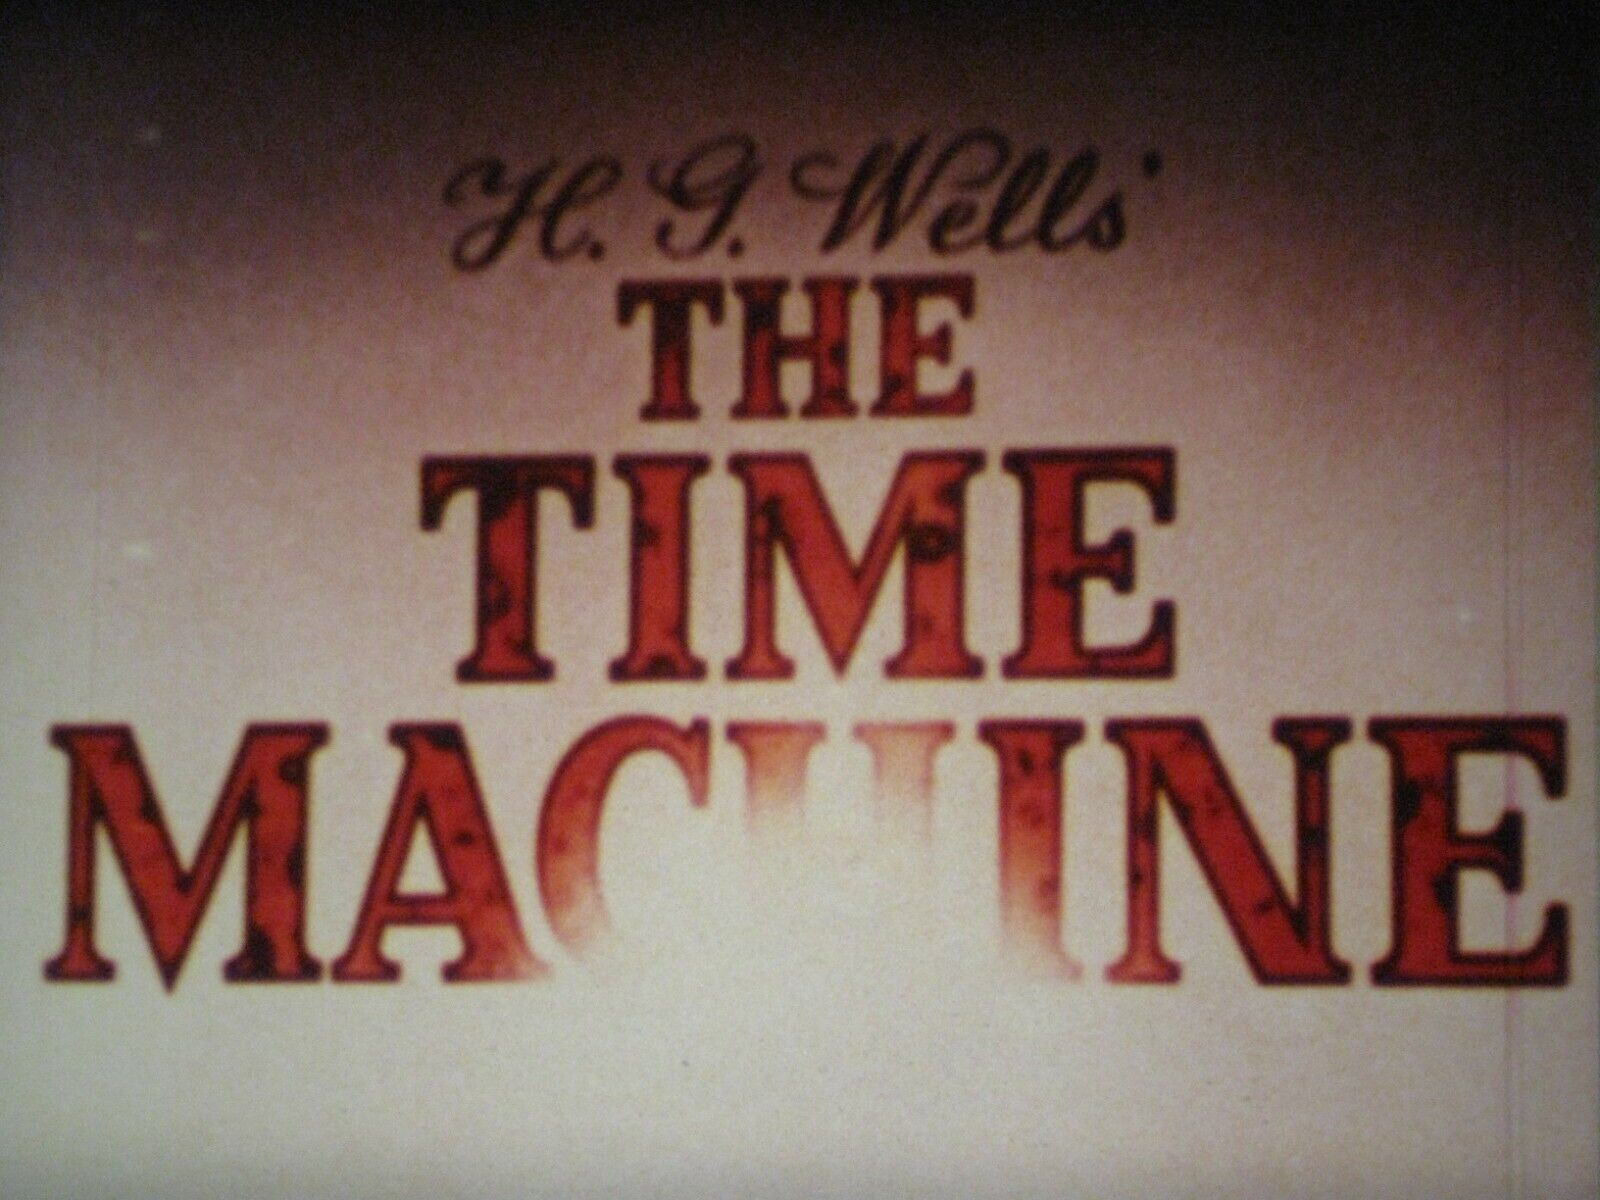 Super 8 film, The Time Machine (1960) 3x400ft Colour sound. 